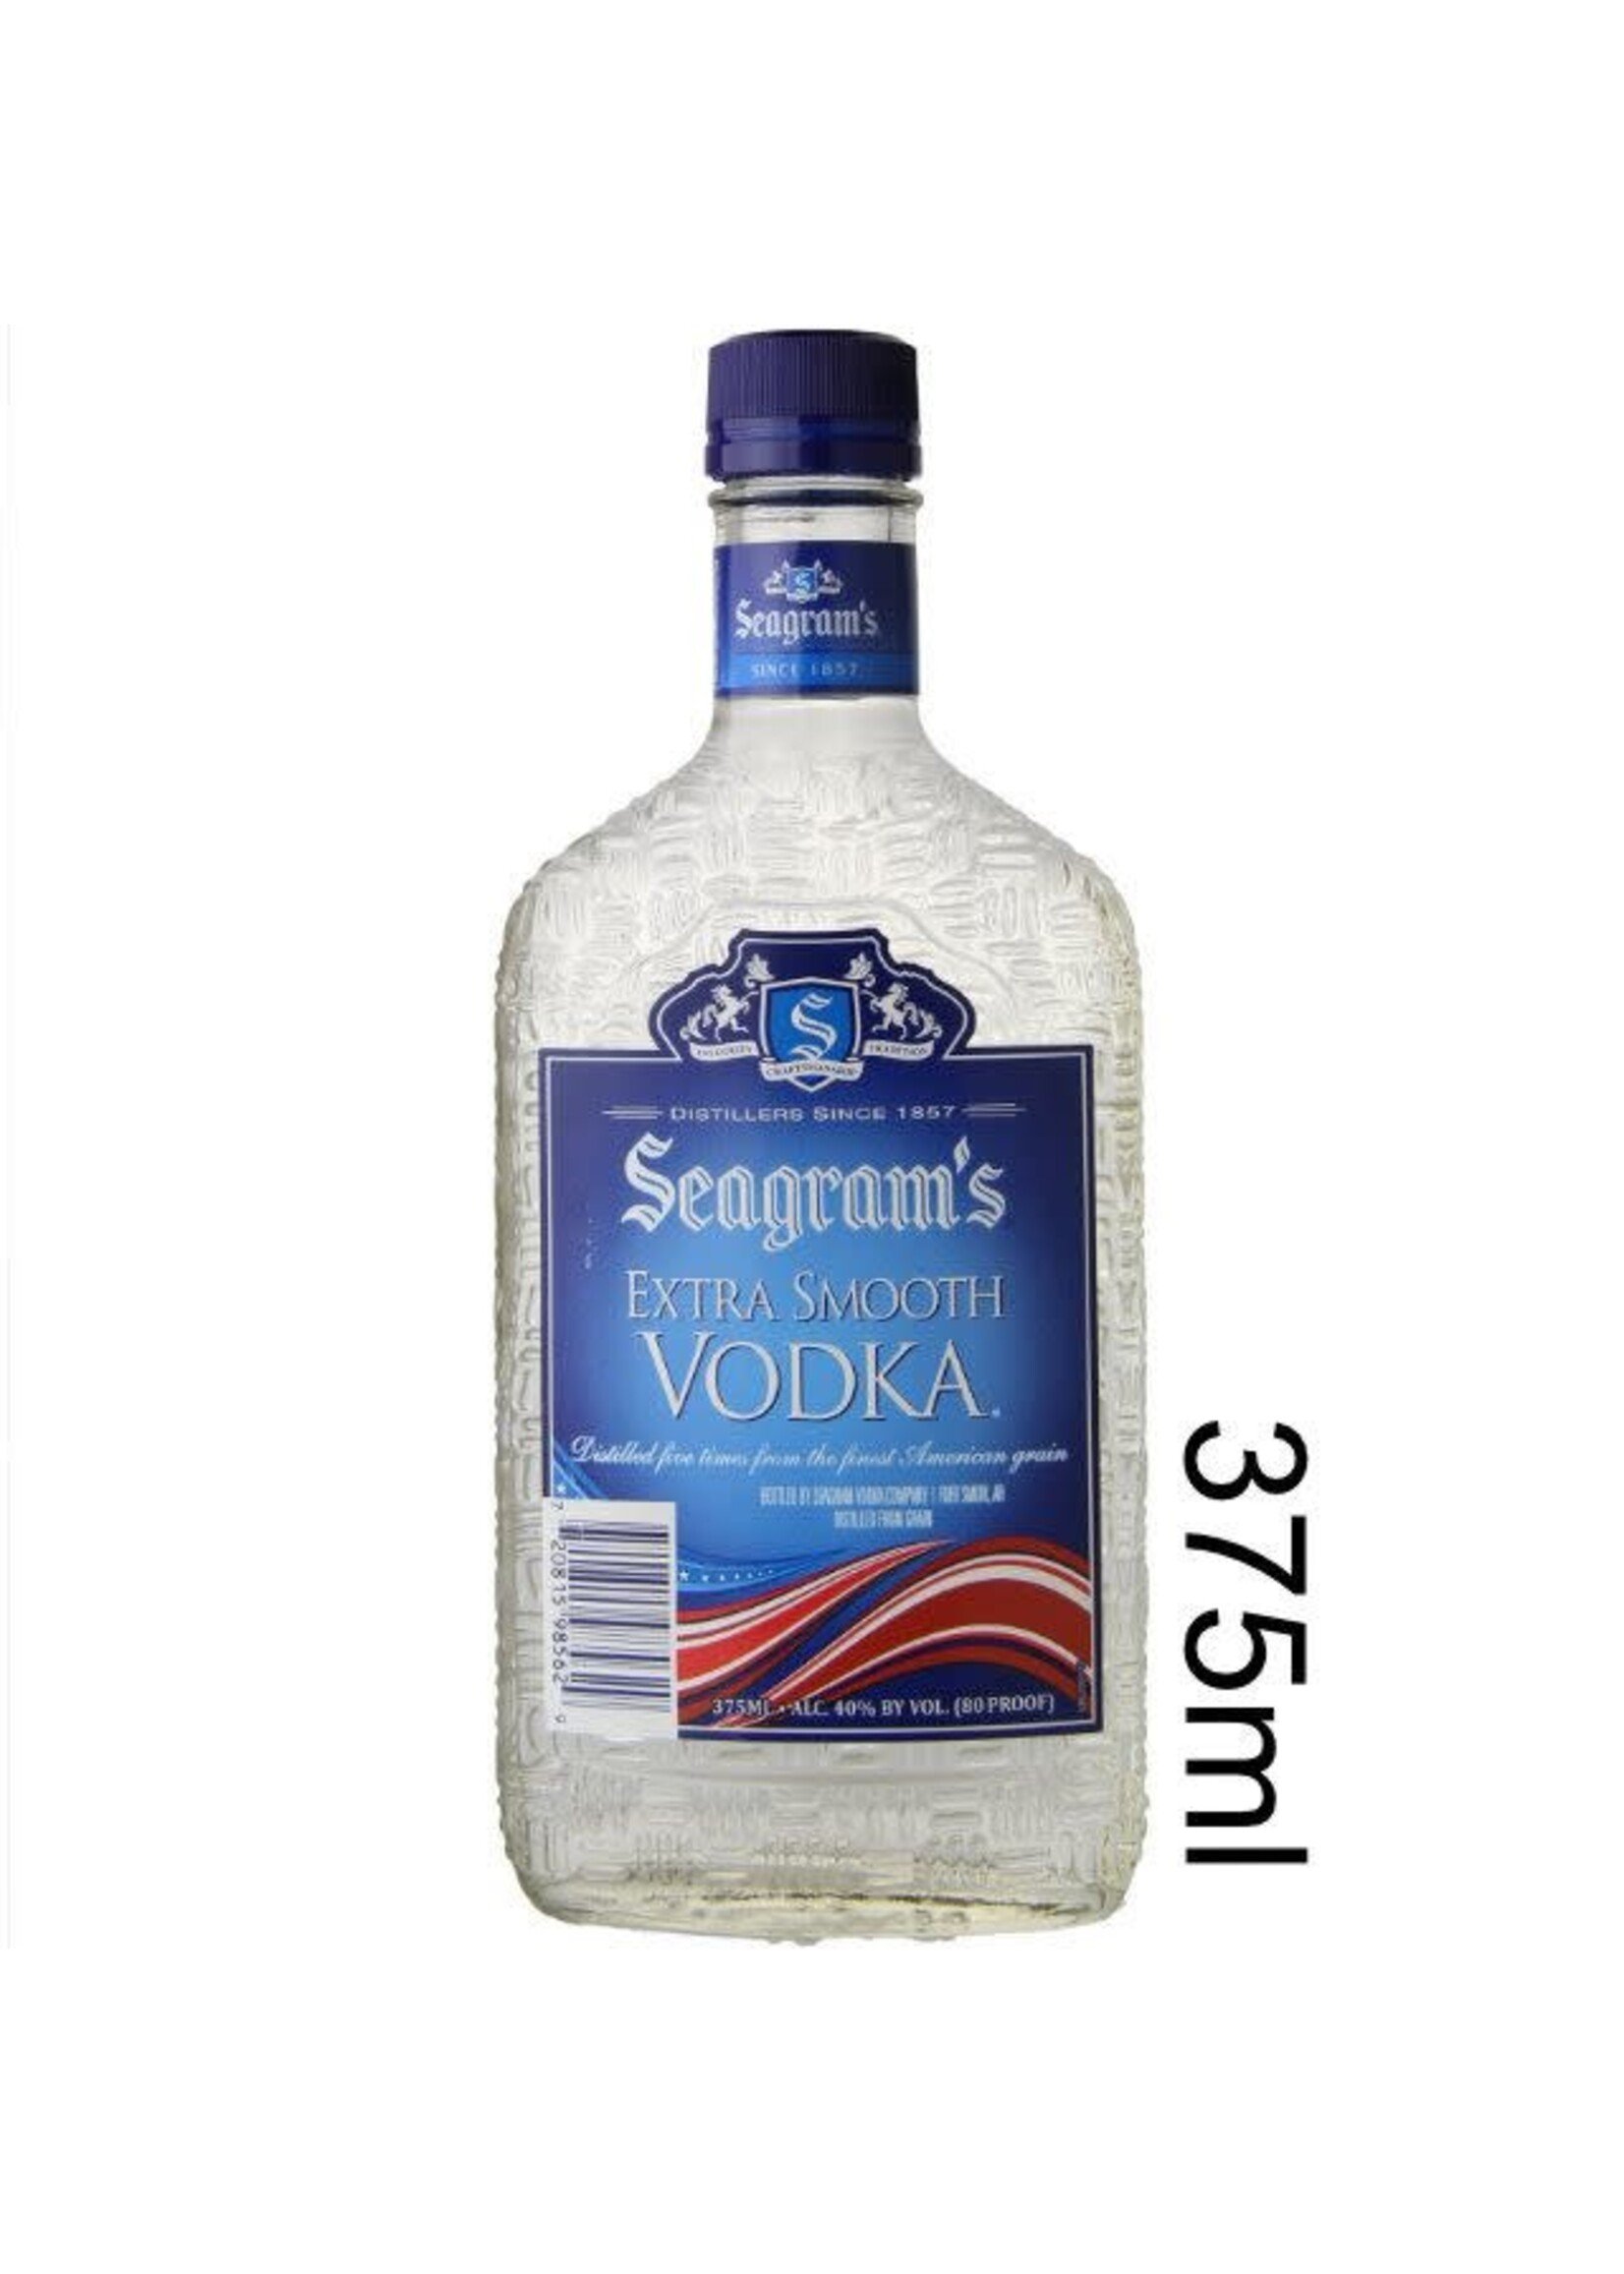 Seagrams Original Vodka 80Proof 375ml